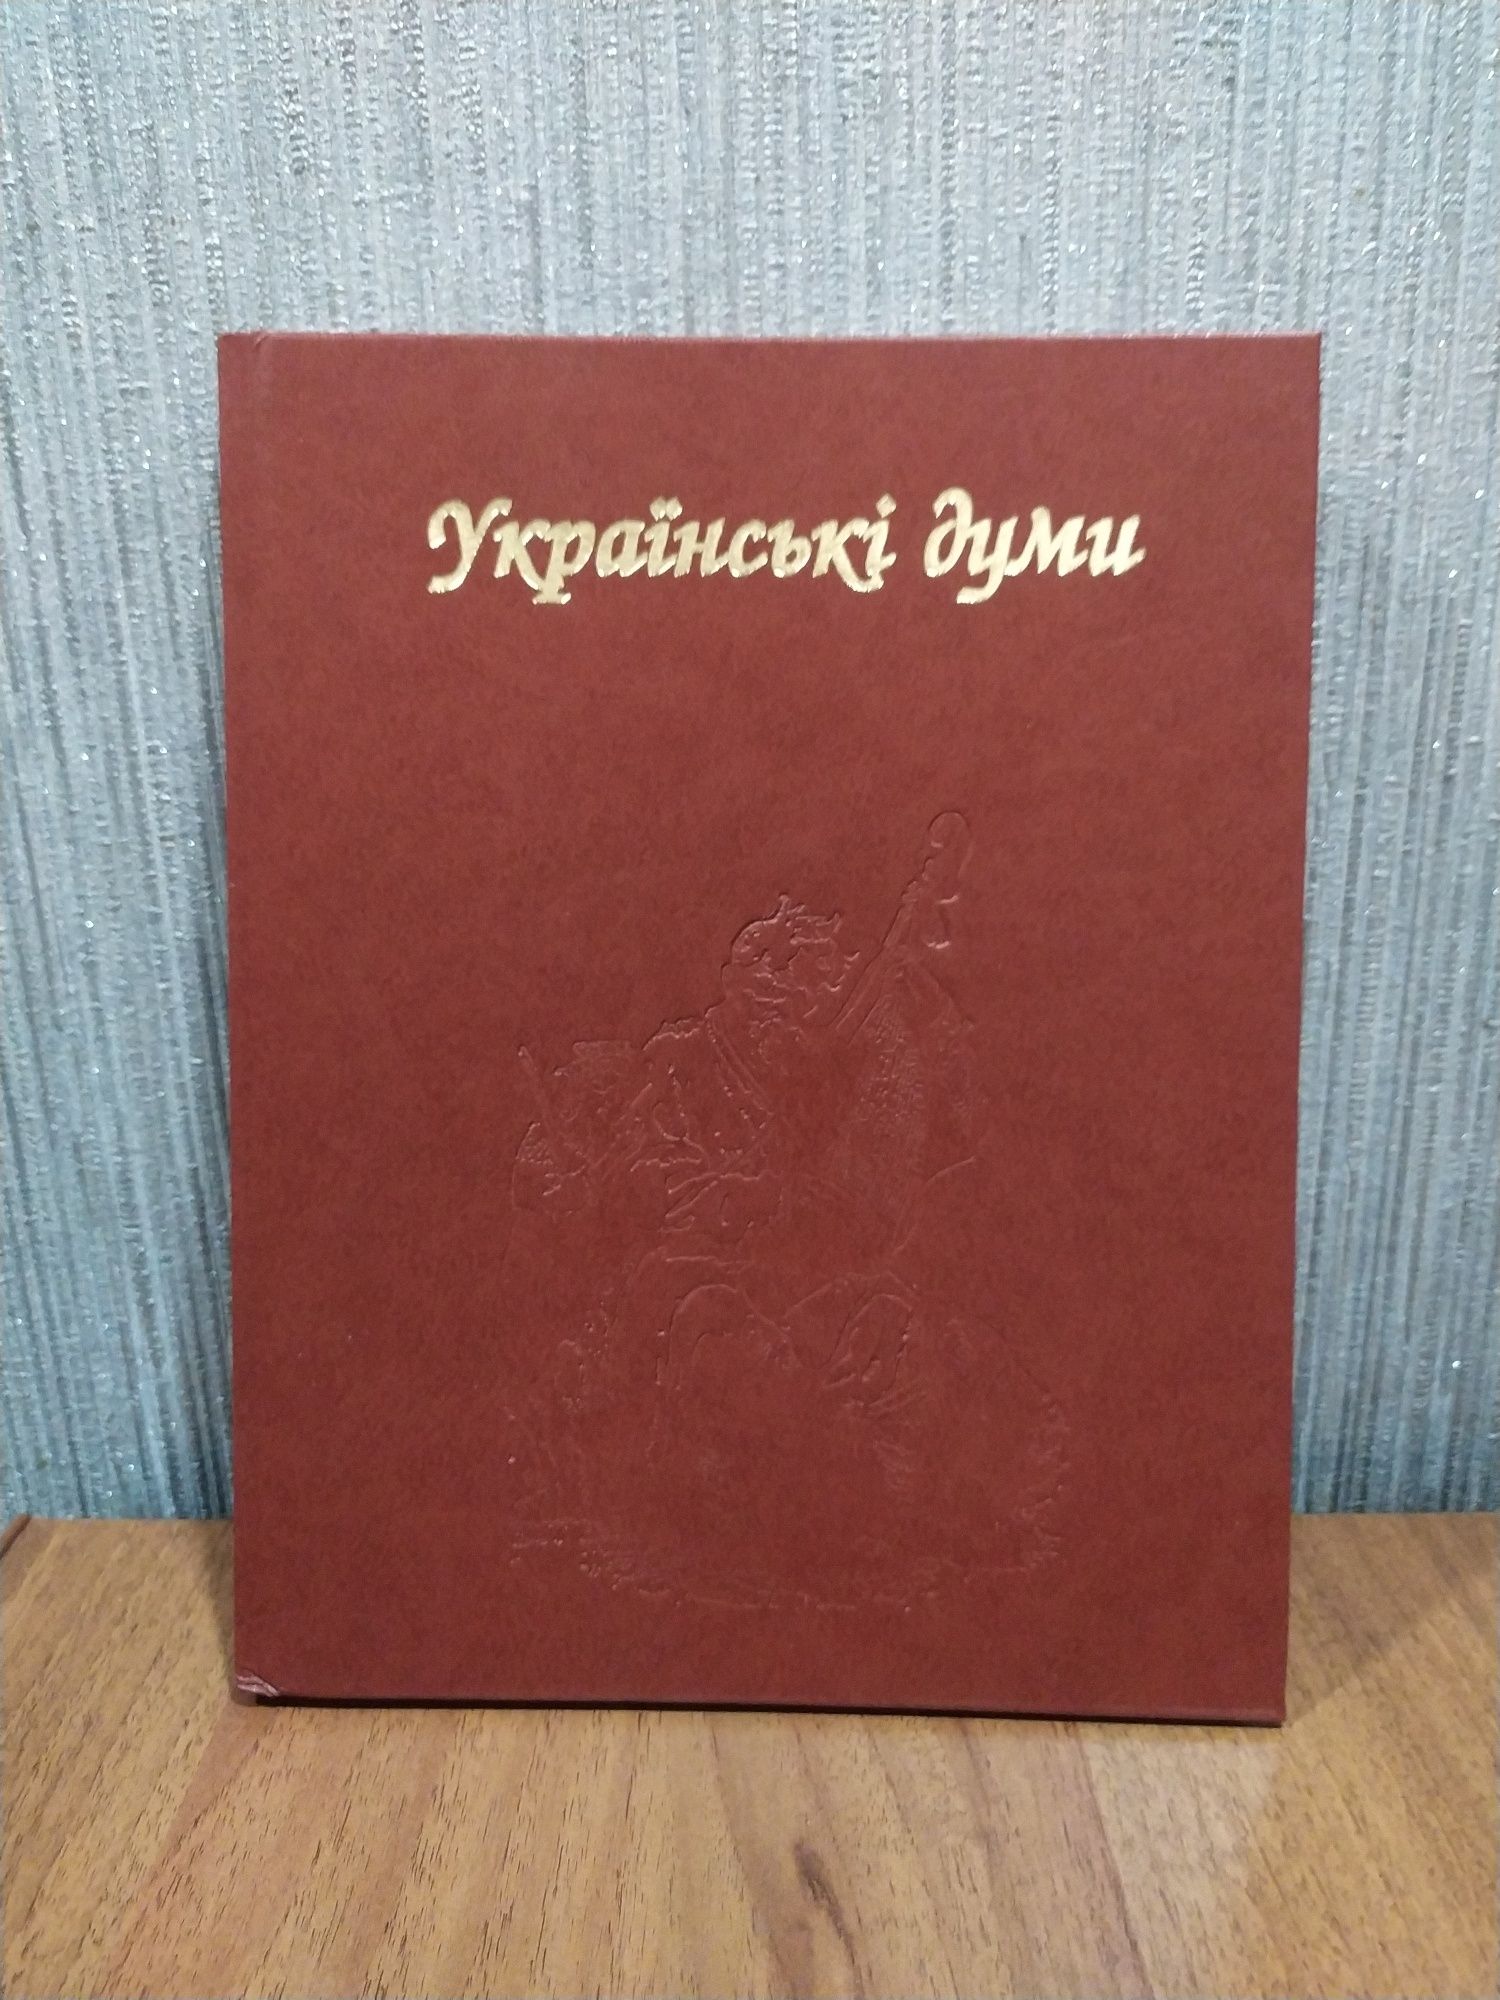 Книга "Українські думи"